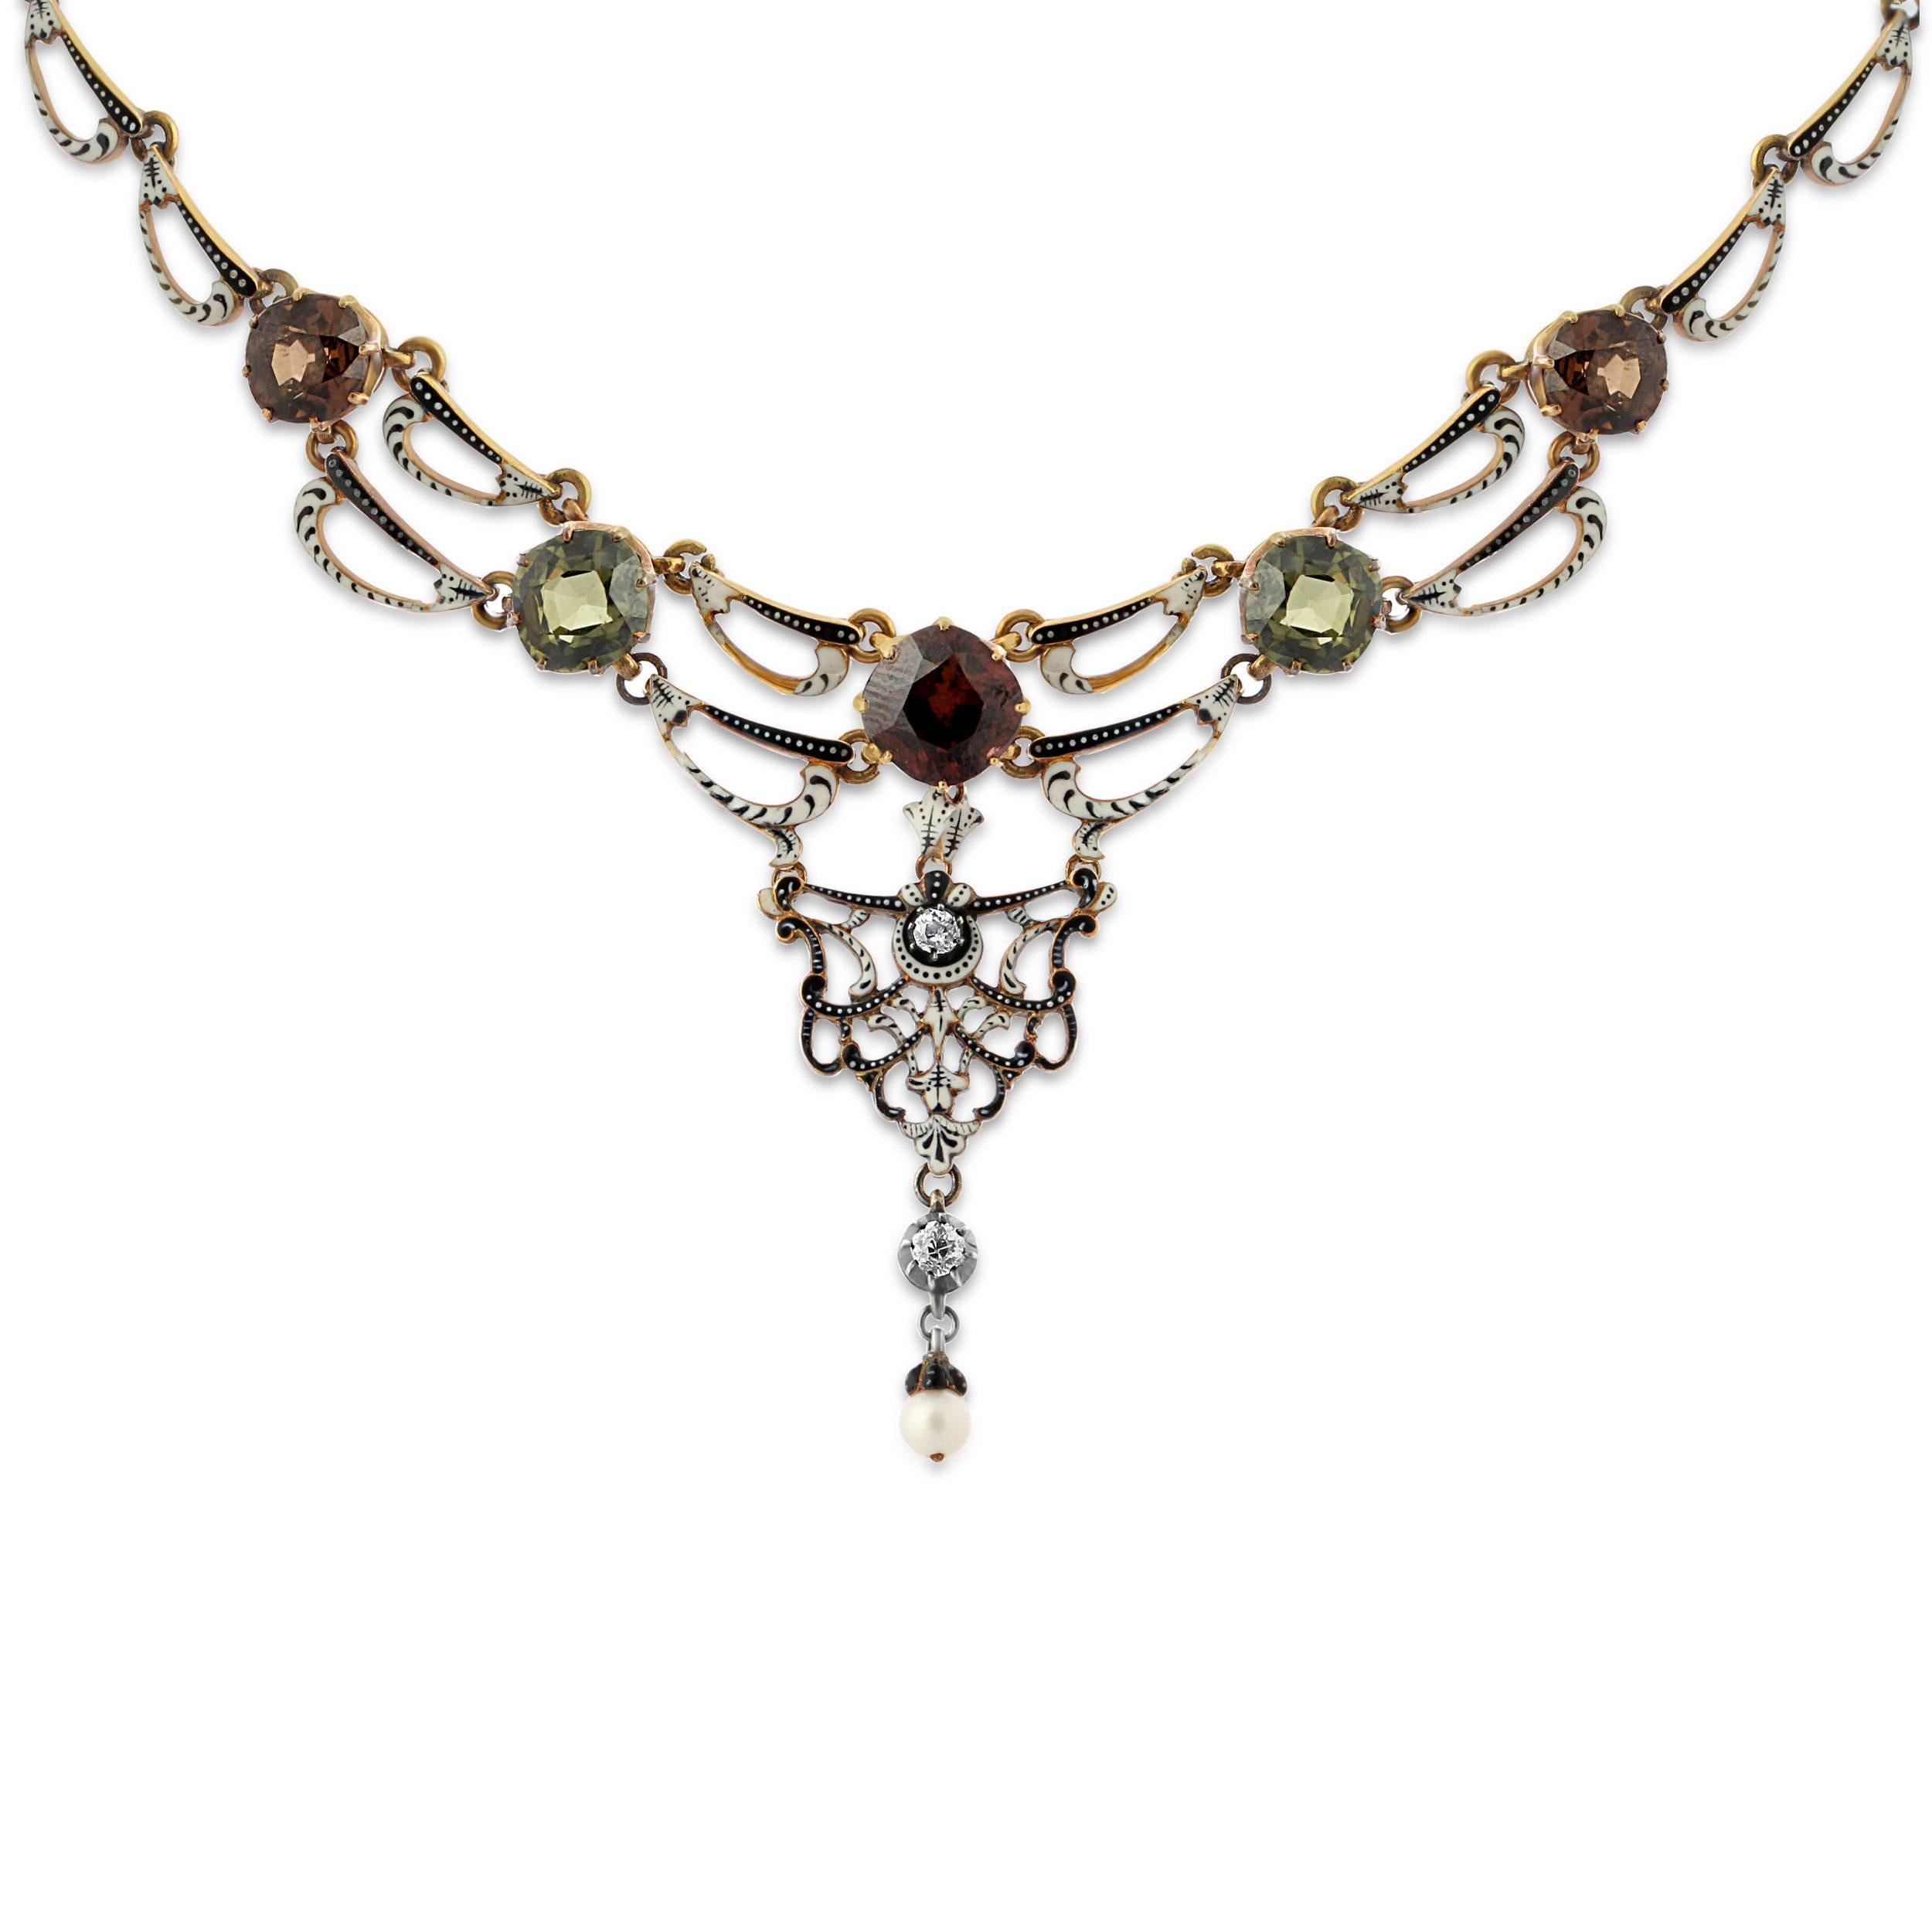 Women's Renaissance Revival Gold & Enamel Necklace by Carlo Giuliano